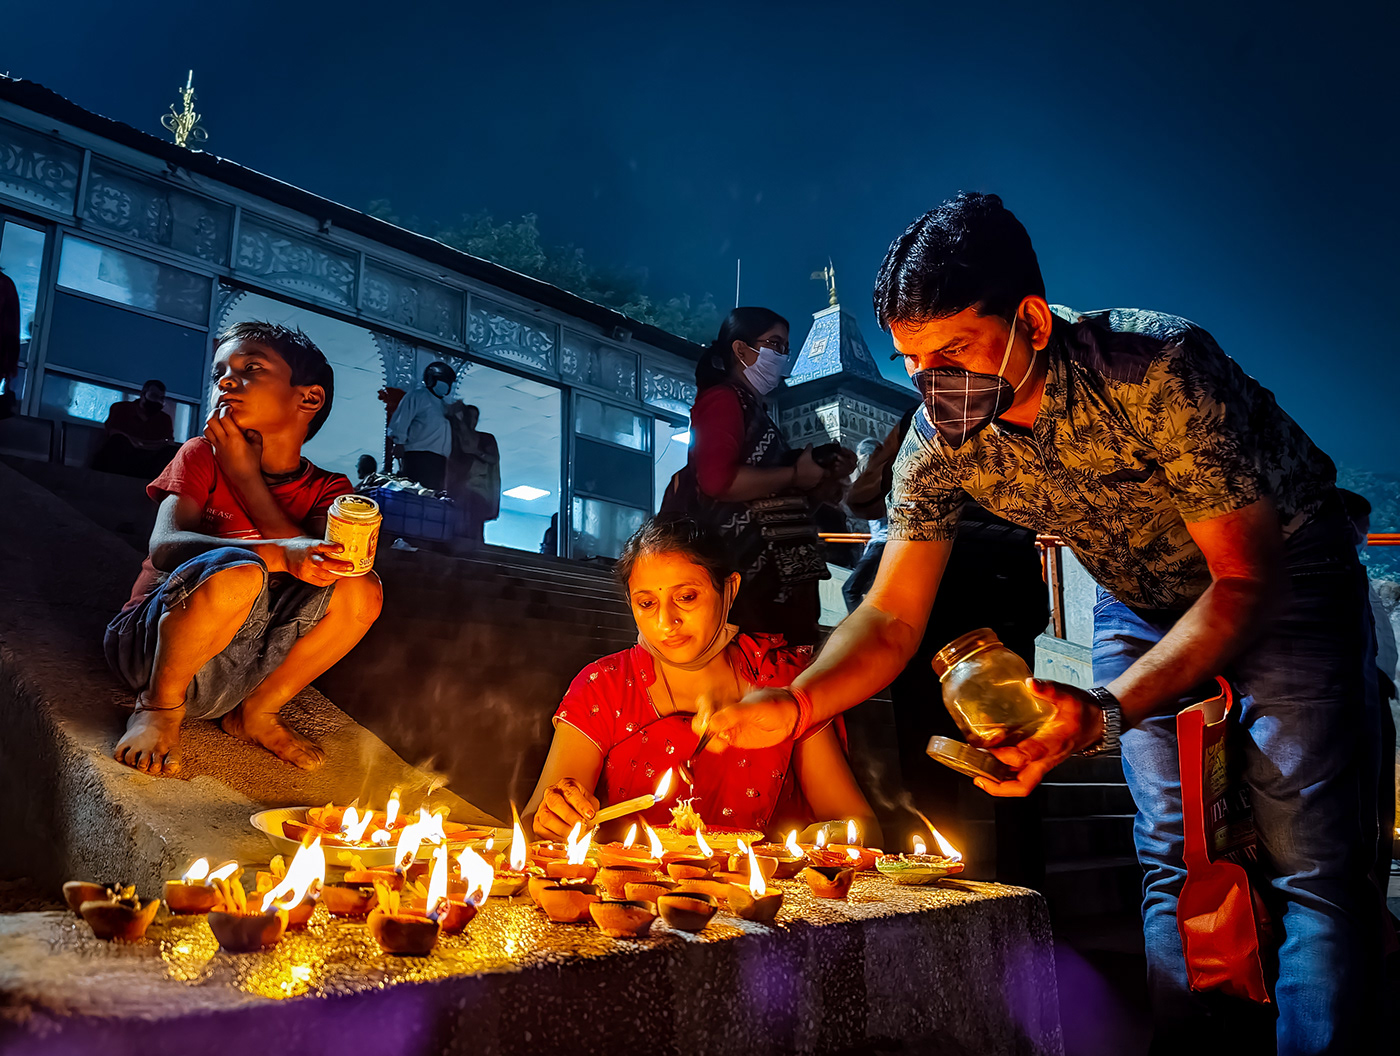 bangla culture Dev Deepavali festival ghat Hindu India Kolkata